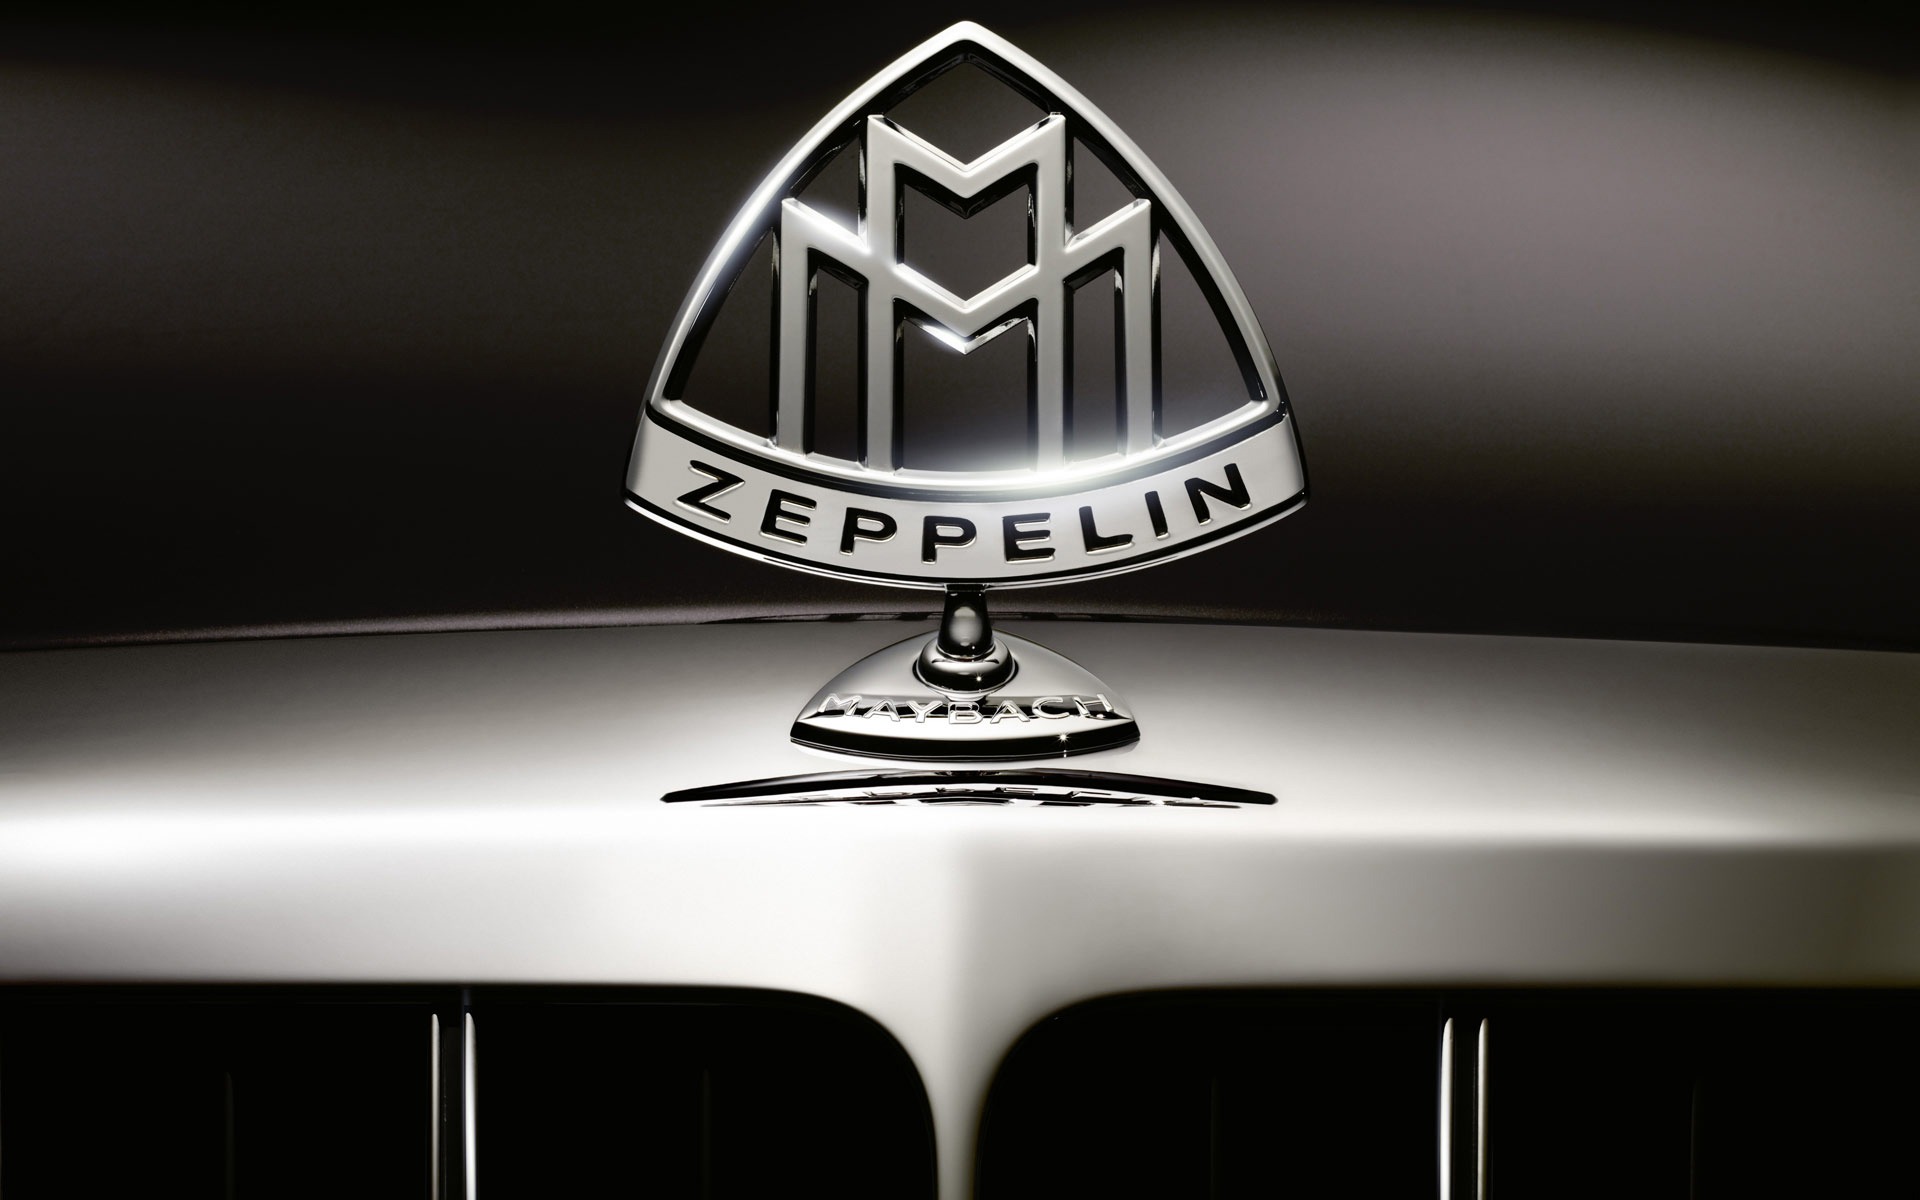 Download Maybach Zeppelin logo Wallpaper Maybach Cars Wallpaper